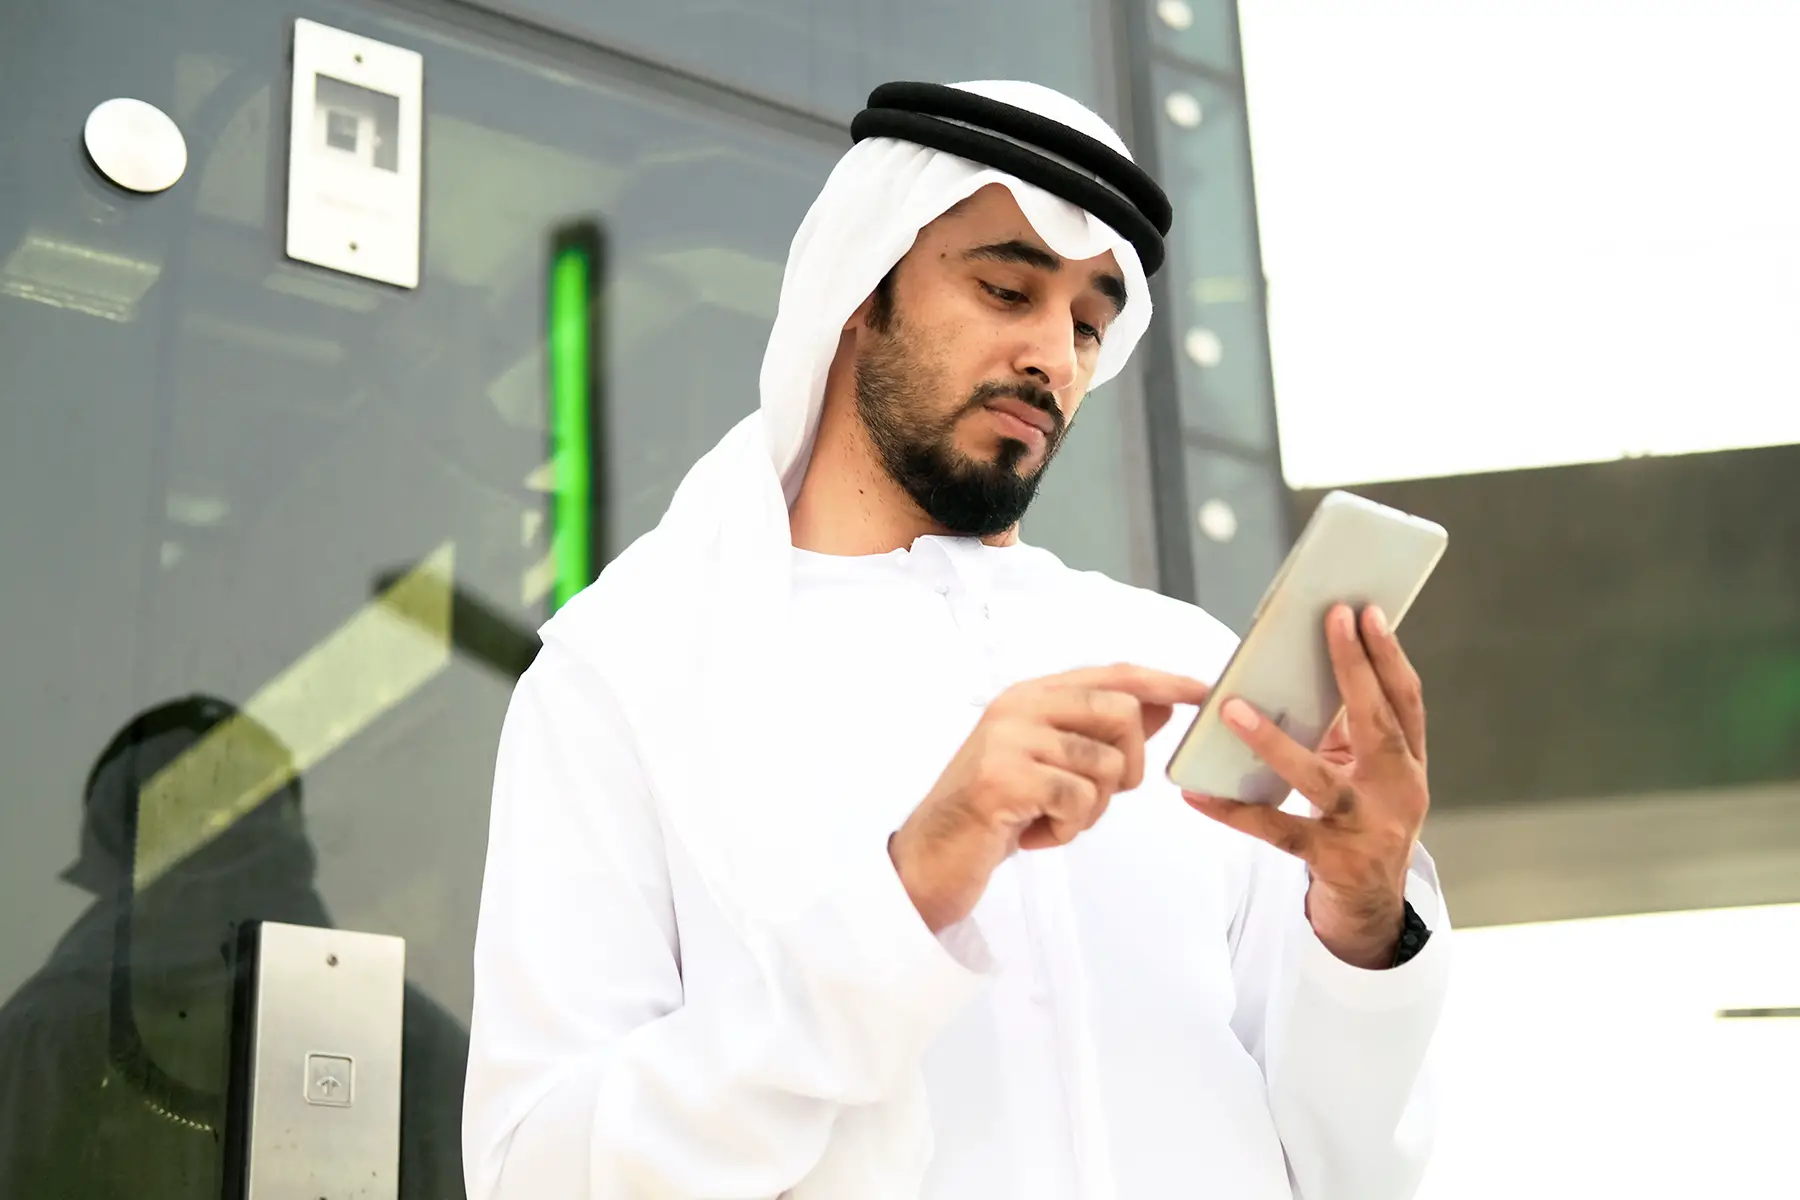 Qatari man using his mobile phone